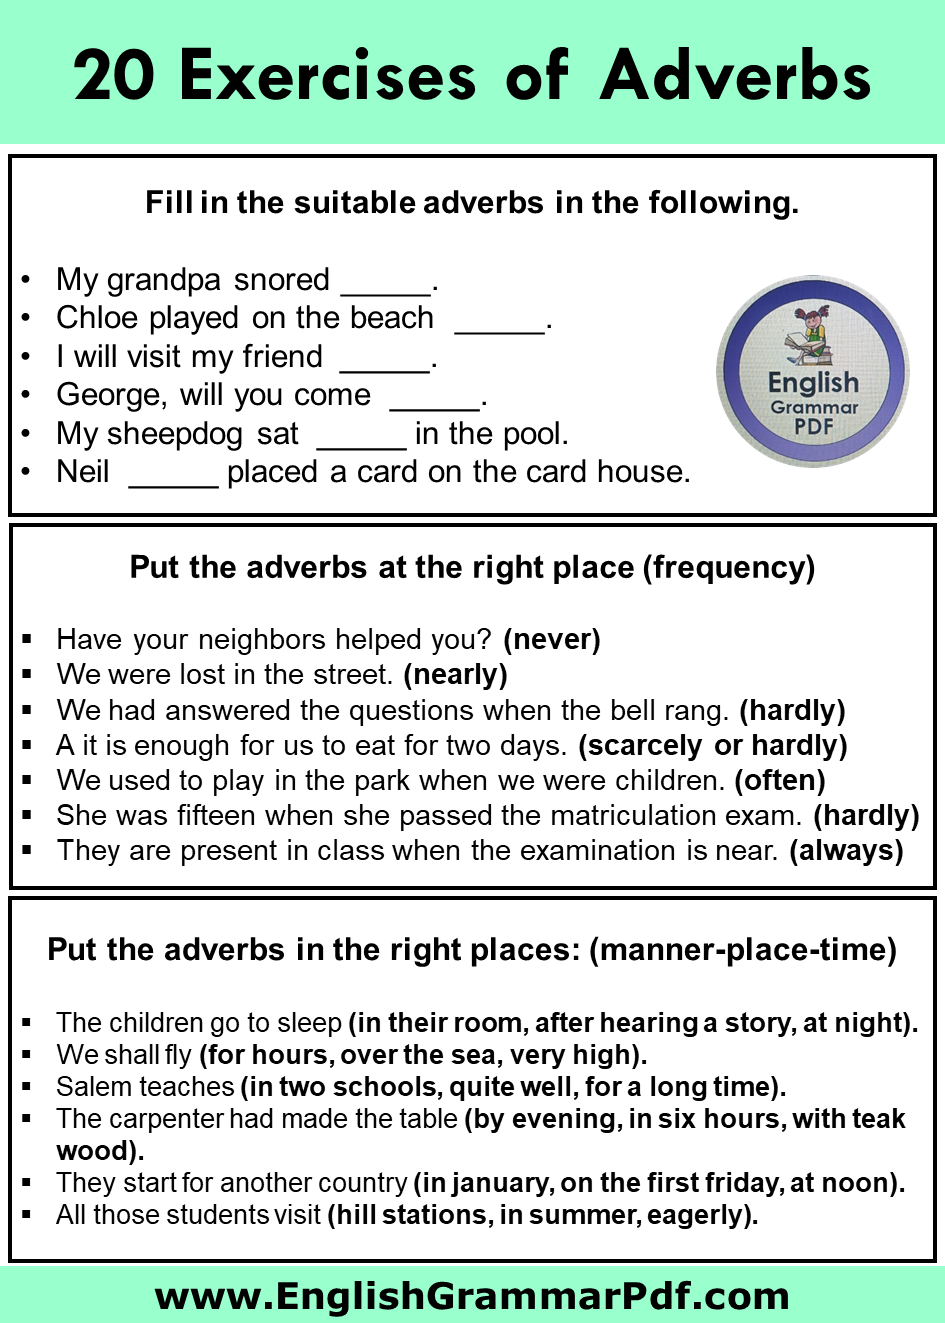 20-exercises-on-the-adverb-adverbs-exercises-pdf-english-grammar-pdf